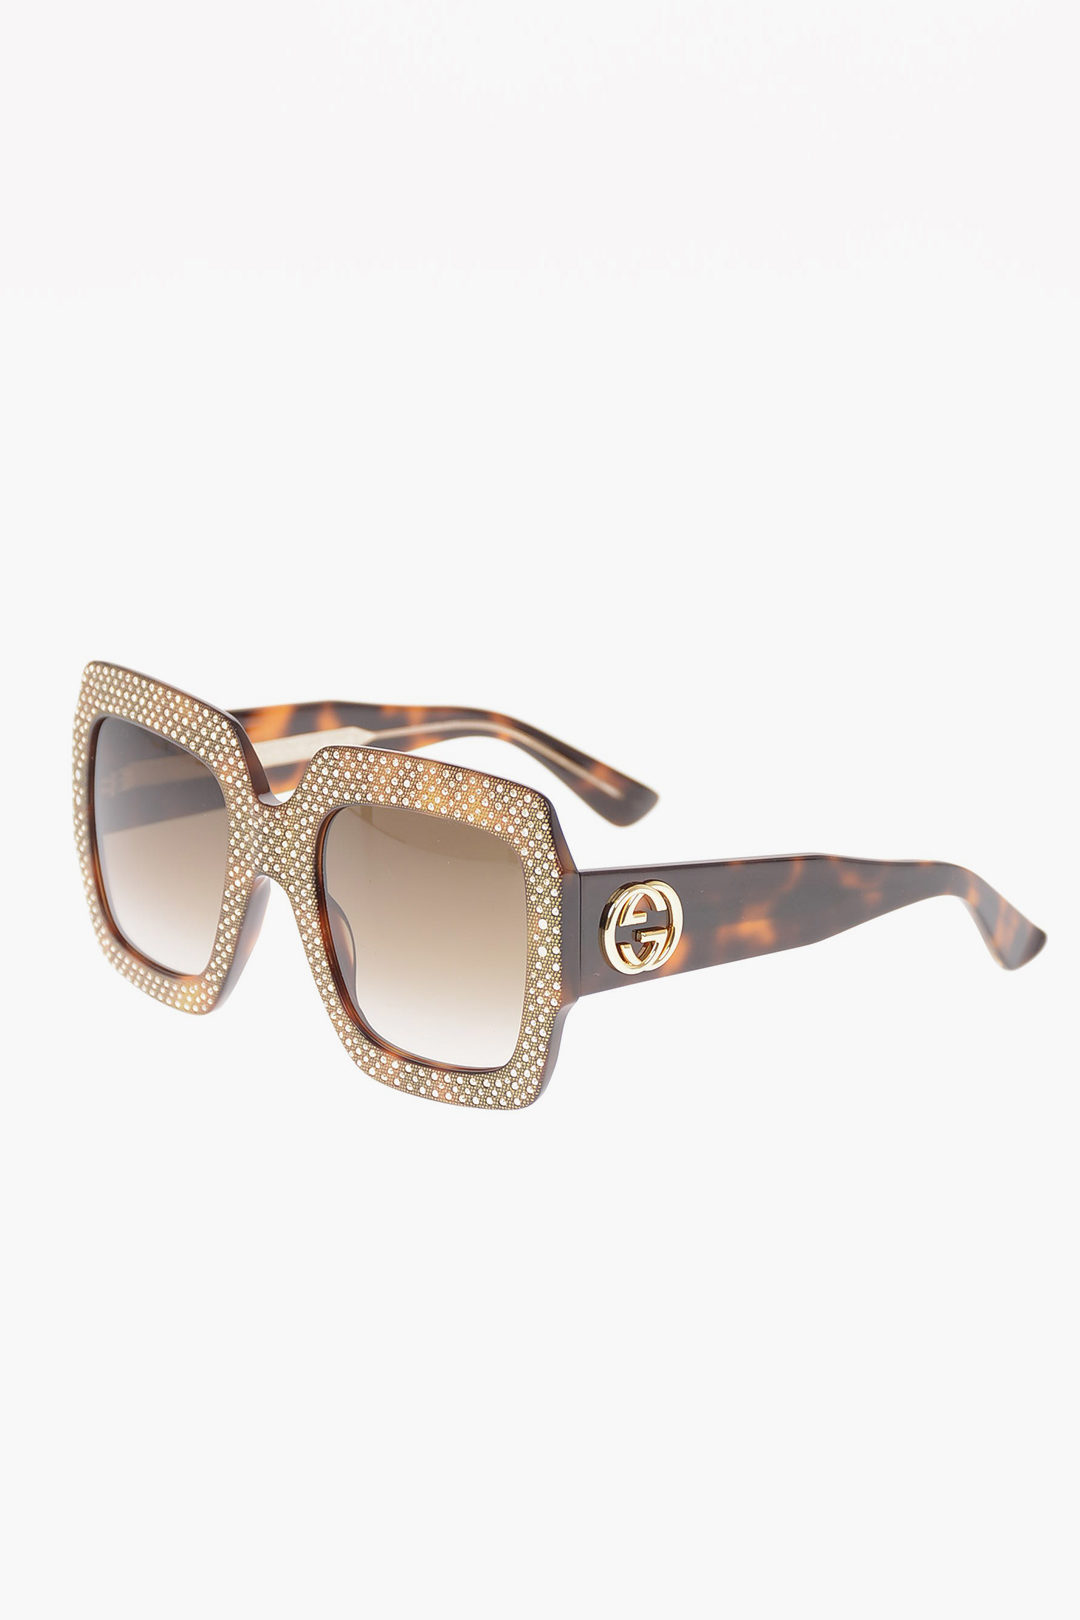 Gucci rhinestone embellished Sunglasses women - Glamood Outlet